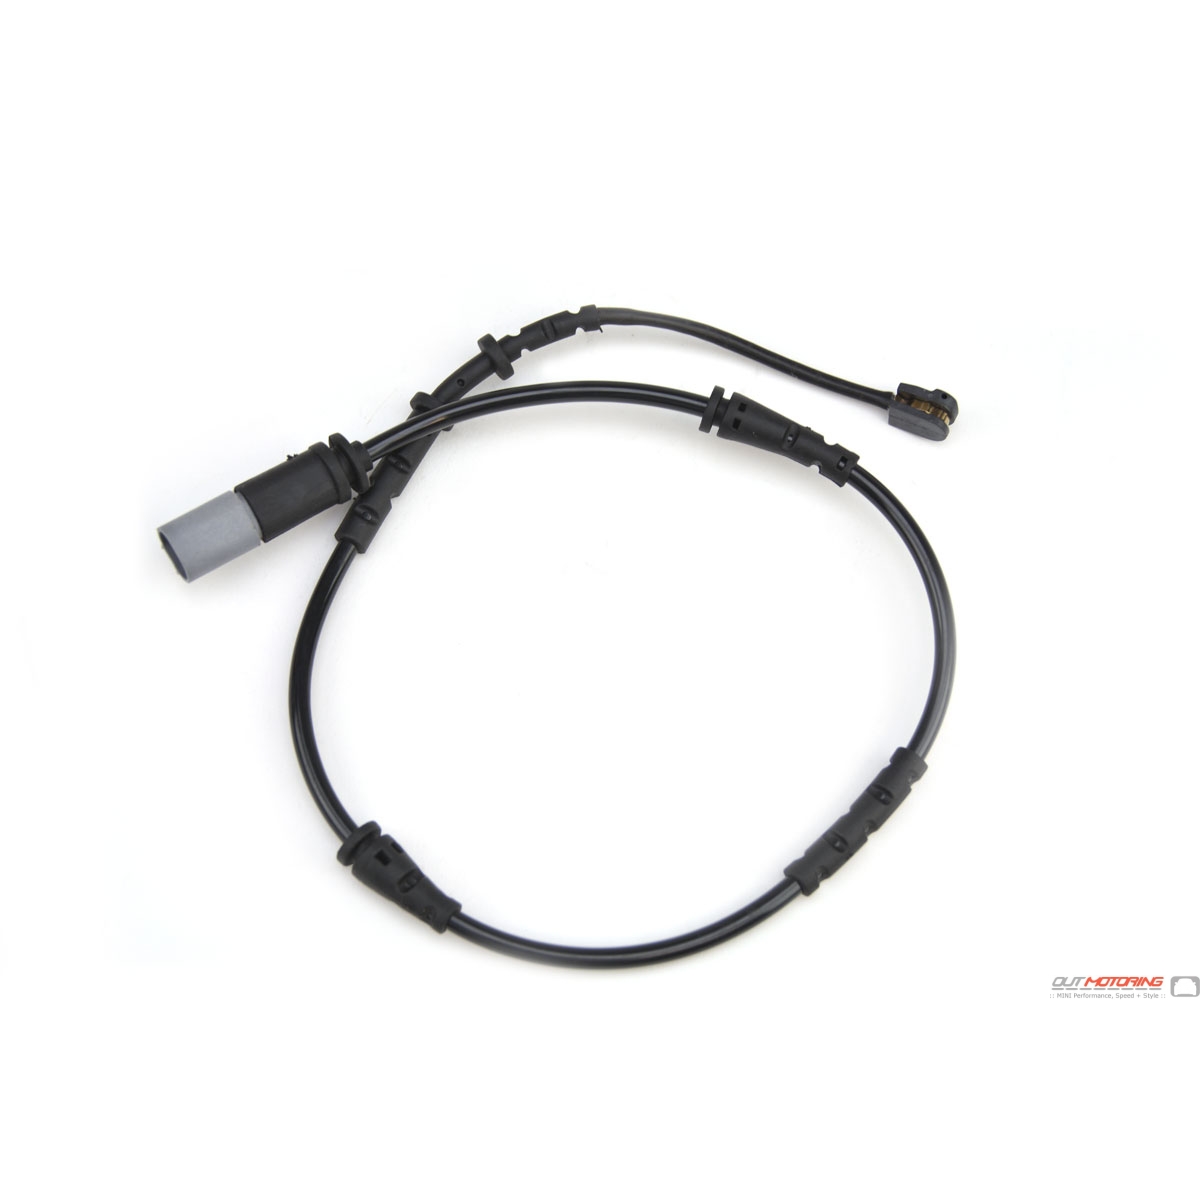 UK SELLER Rear Brake Pad Wear Sensor For Clubman Countryman F54 F55 F56 34356799736 